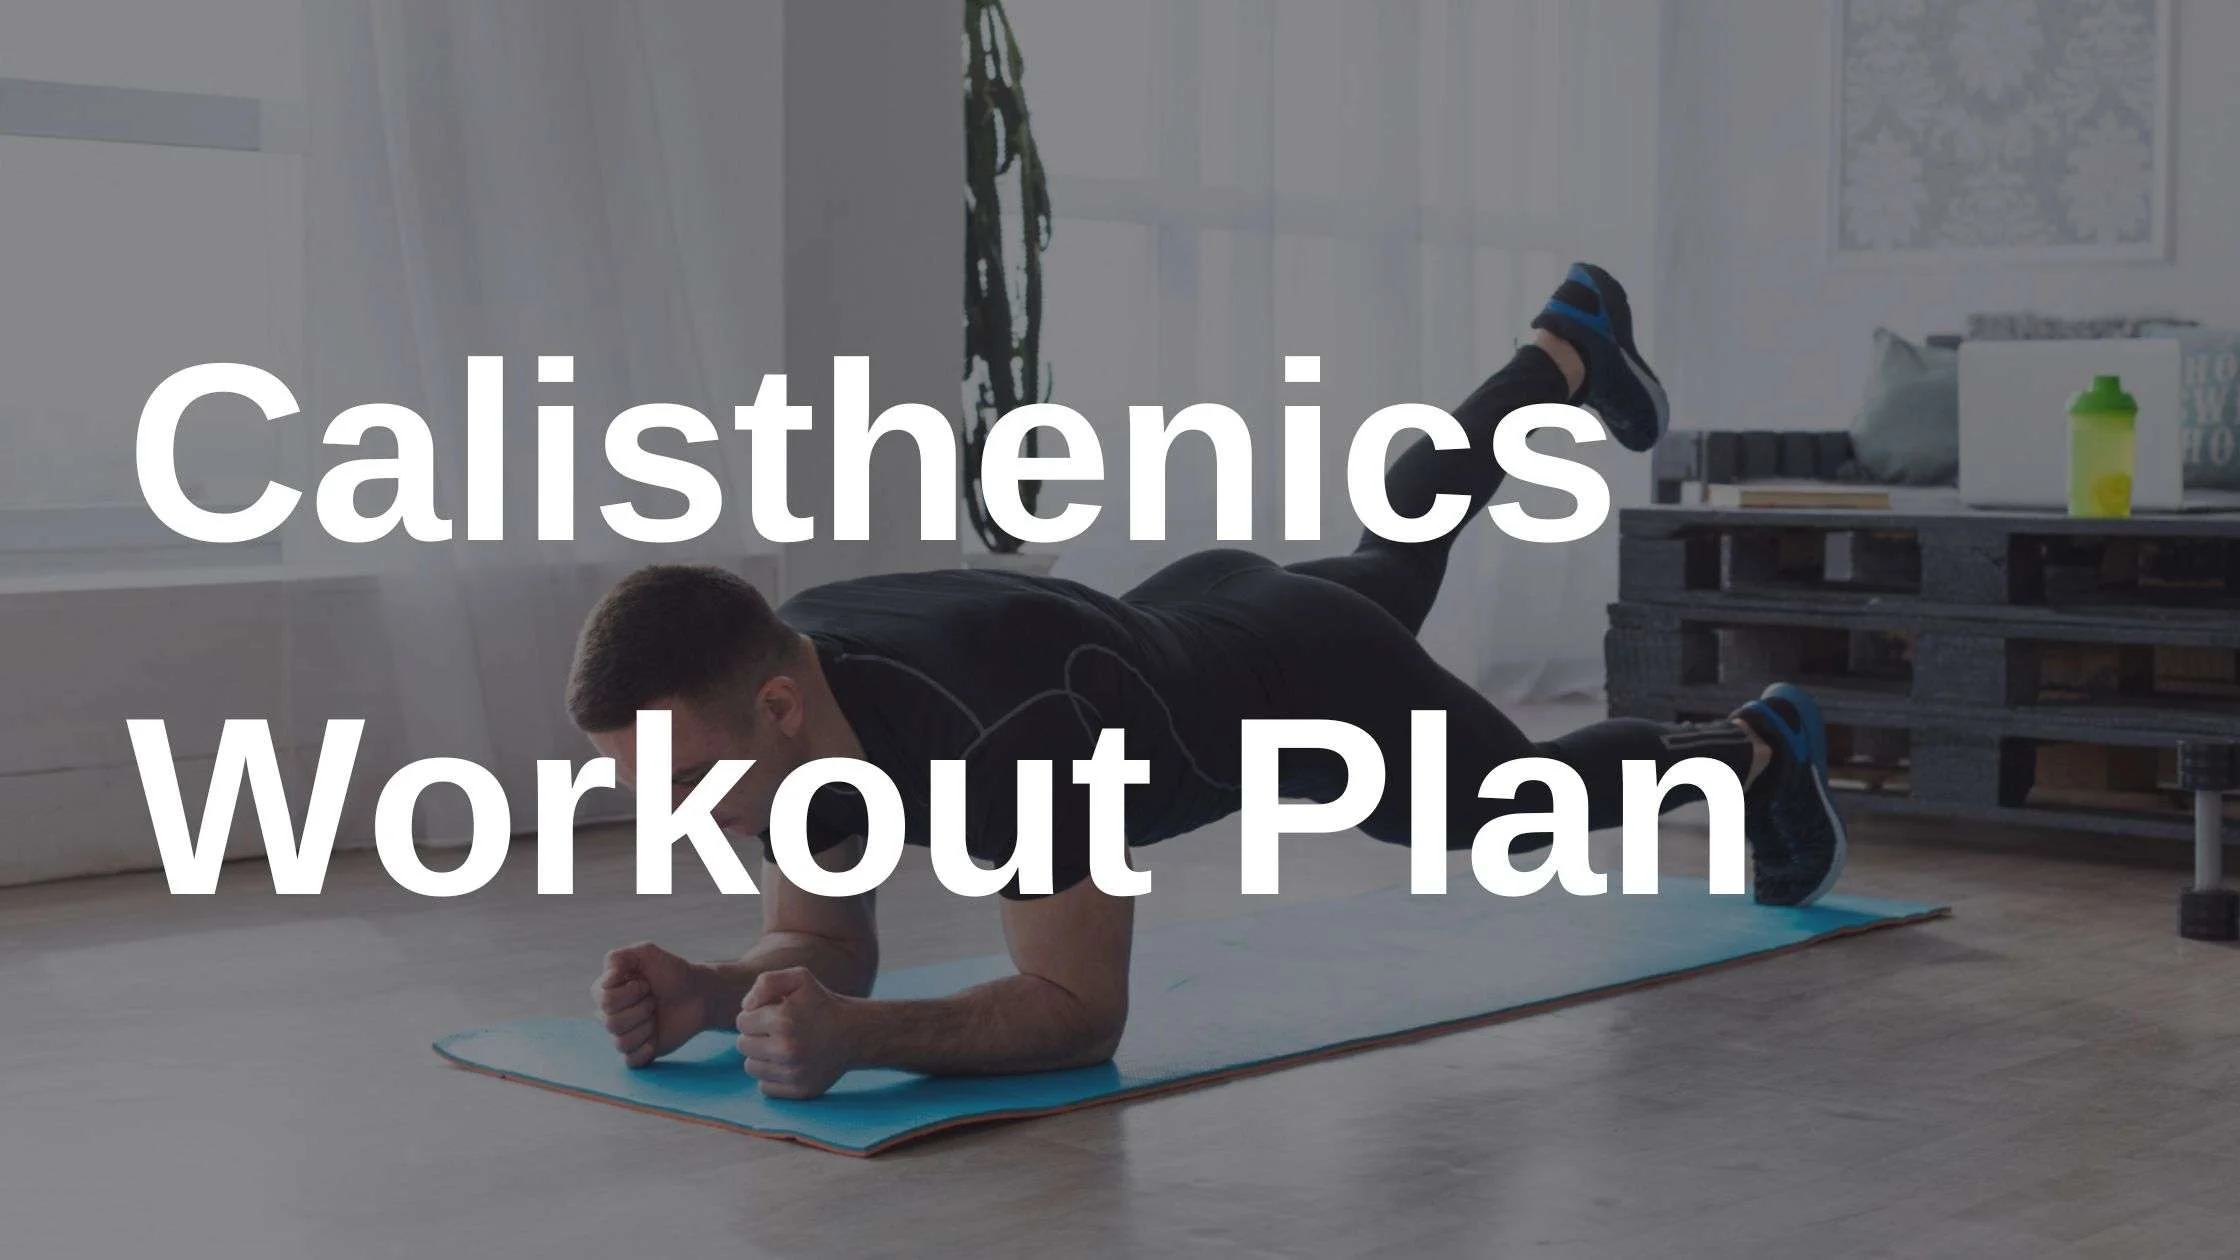 7 Days calisthenics Workout Plan – Start your journey here!